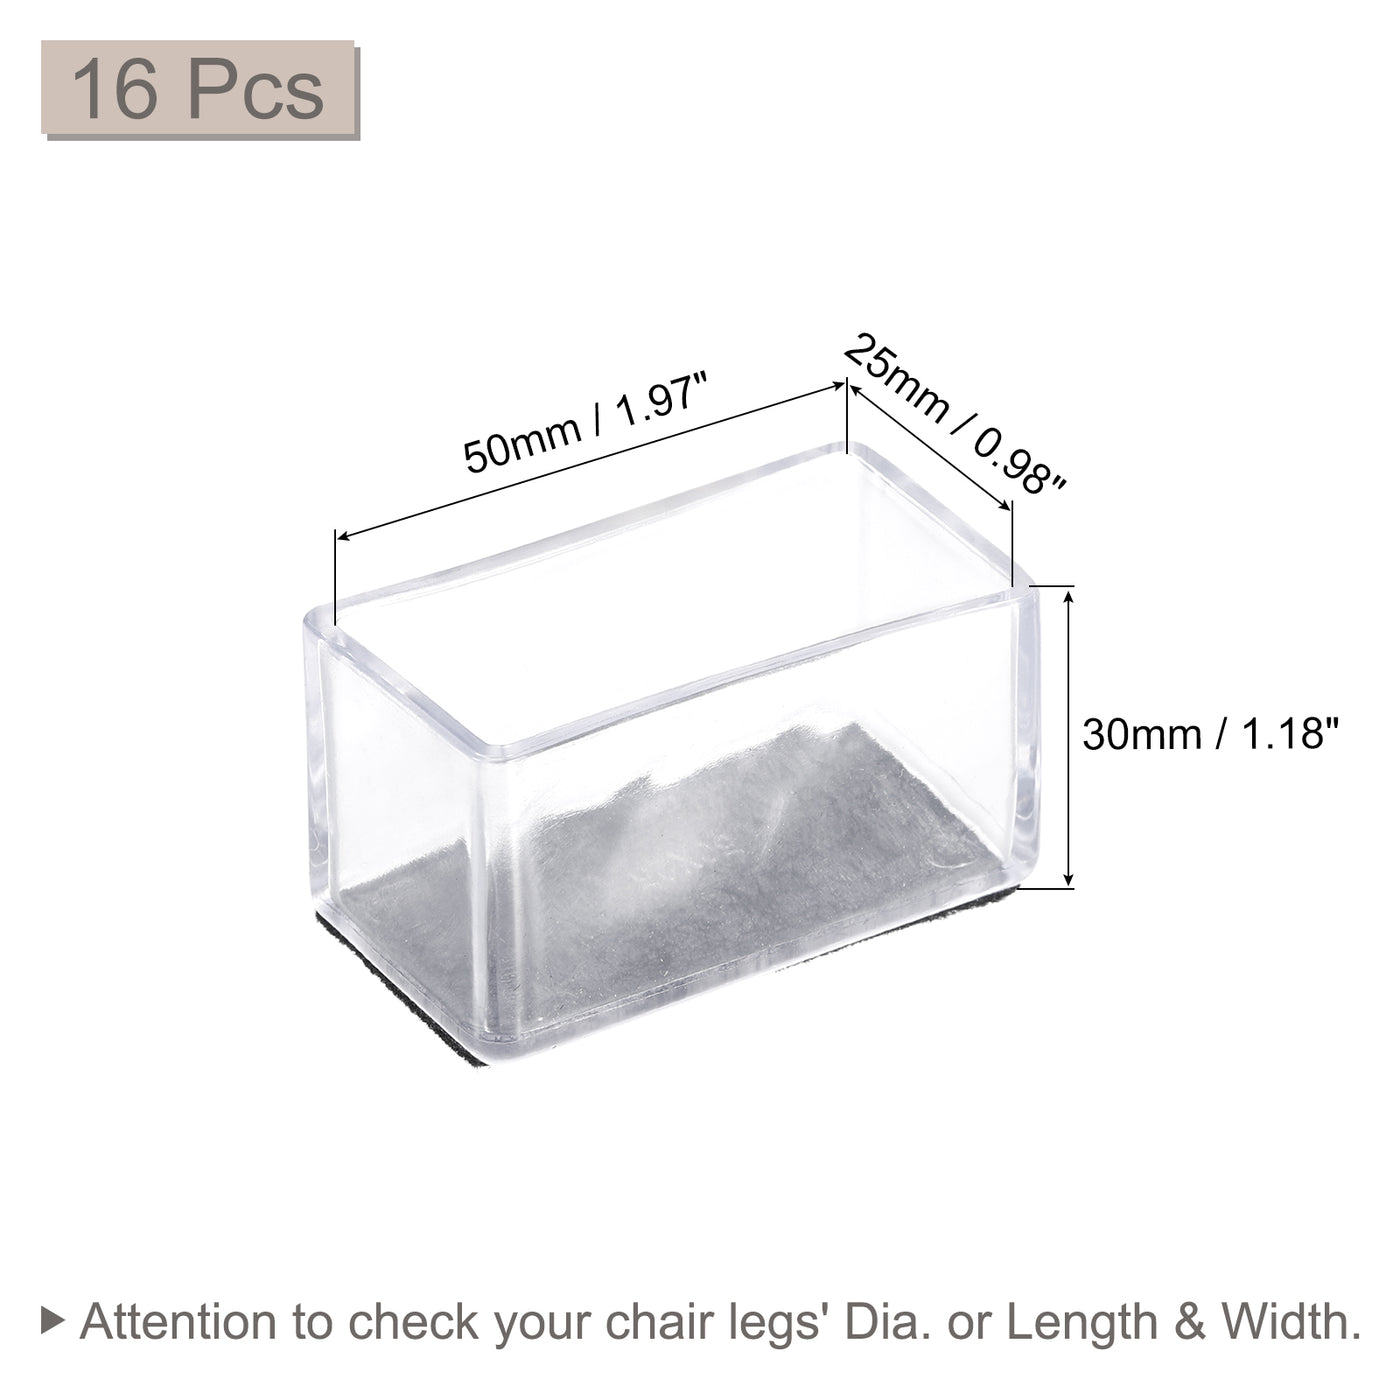 uxcell Uxcell Chair Leg Floor Protectors, 16Pcs 50mm(1.97") Rectangle PVC & Felt Chair Leg Cover Caps for Hardwood Floors (Clear White)